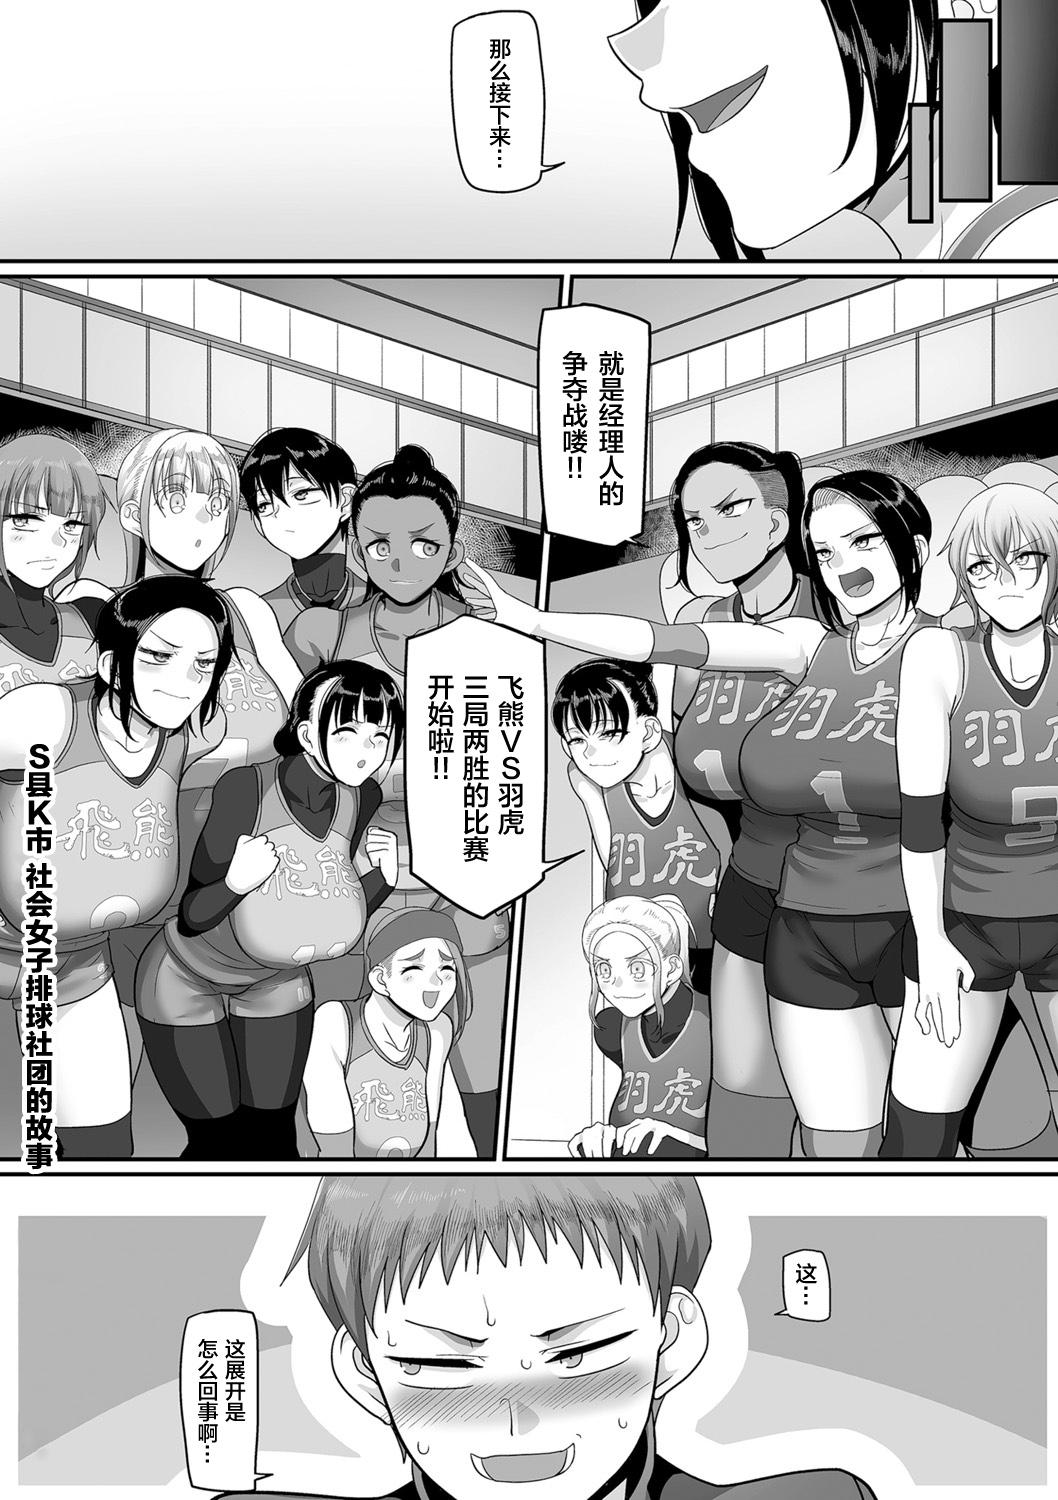 [Yamamoto Zenzen] S-ken K-shi Shakaijin Joshi Volleyball Circle no Jijou 1-16 【Chinese】 239